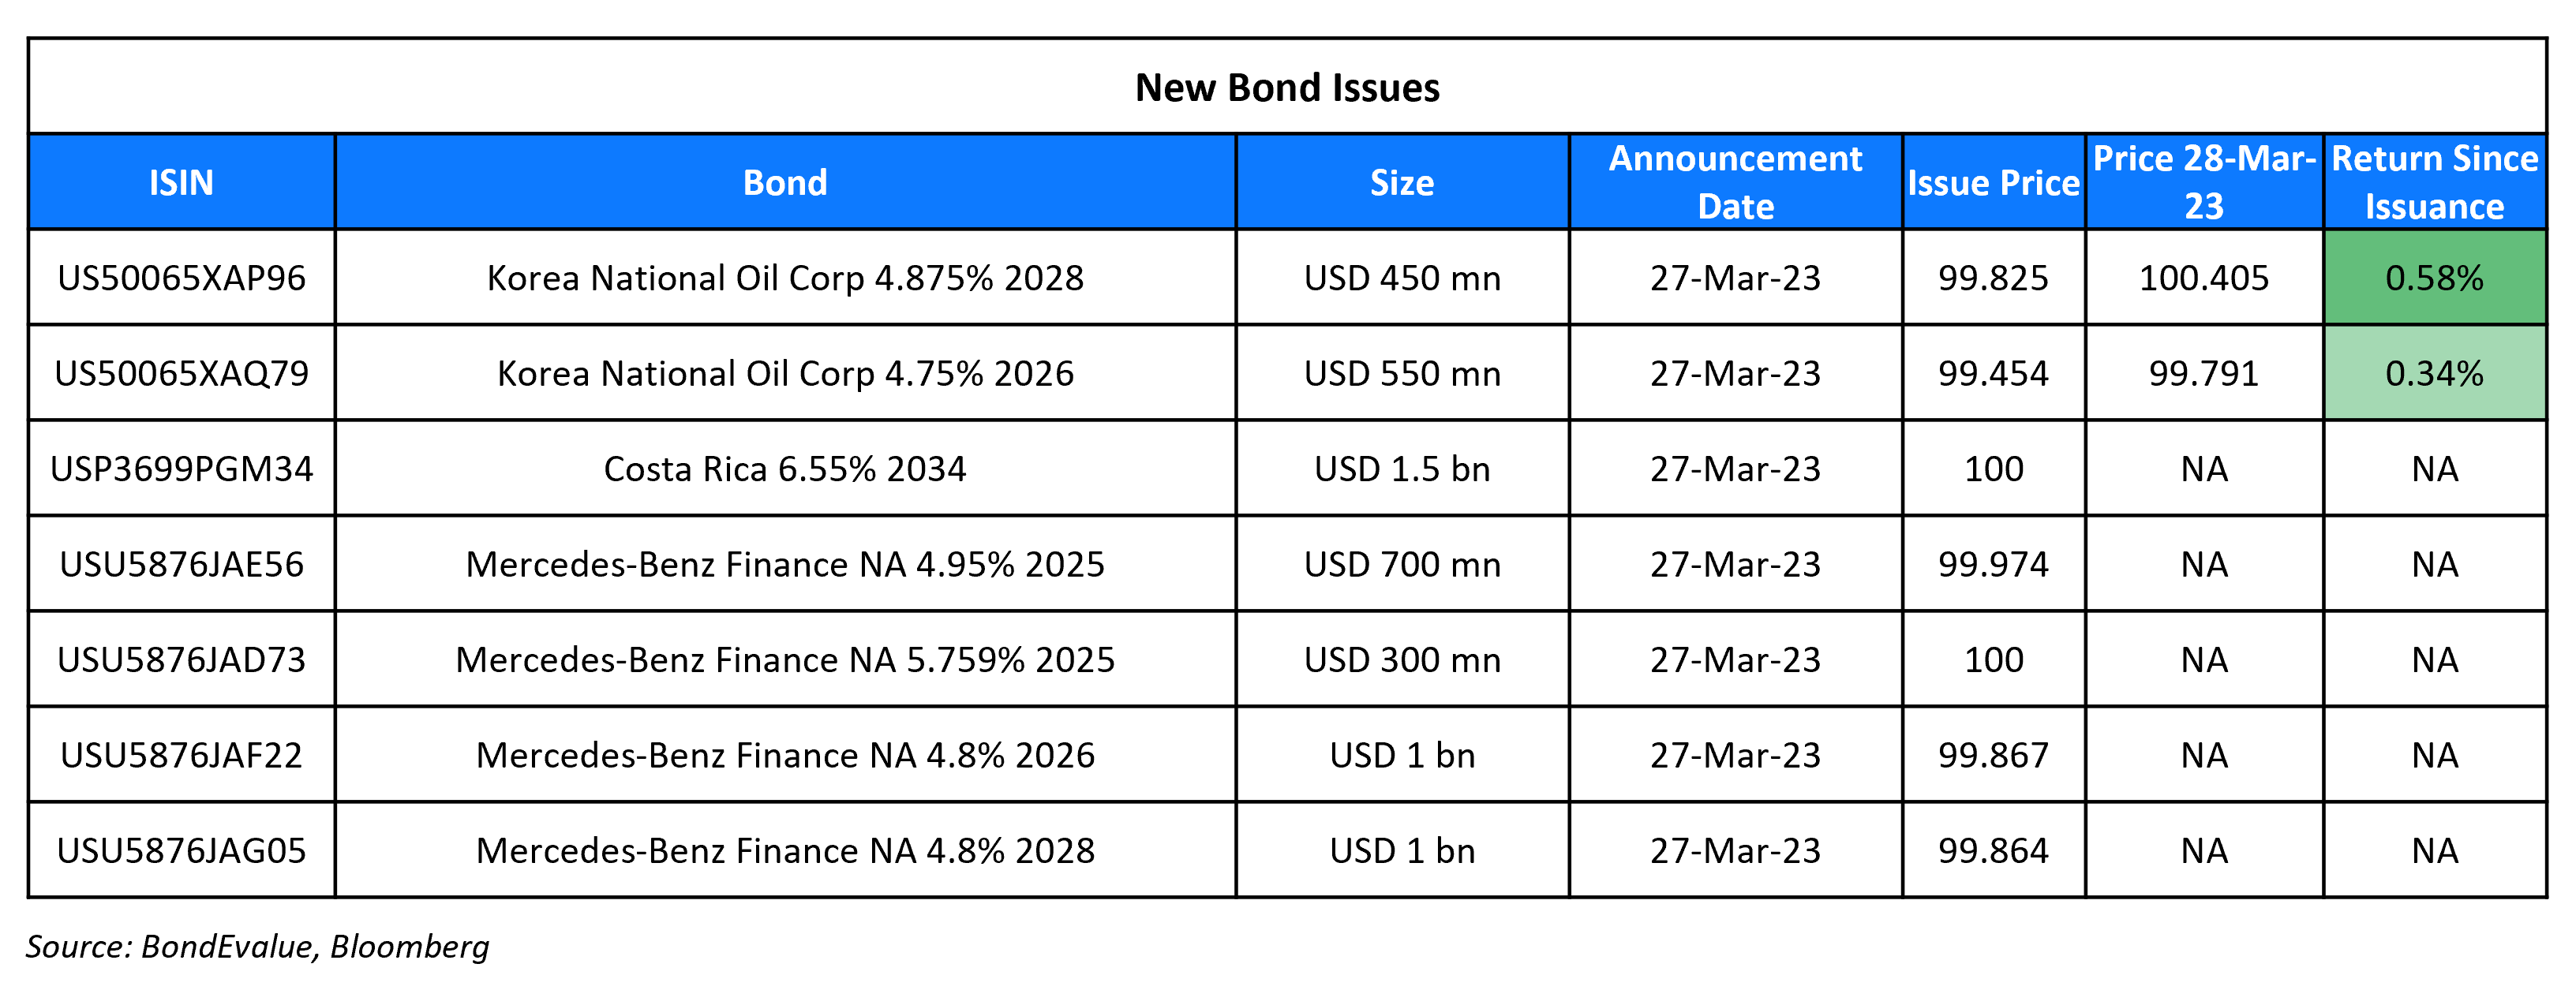 New Bond Issues 28 Mar 23